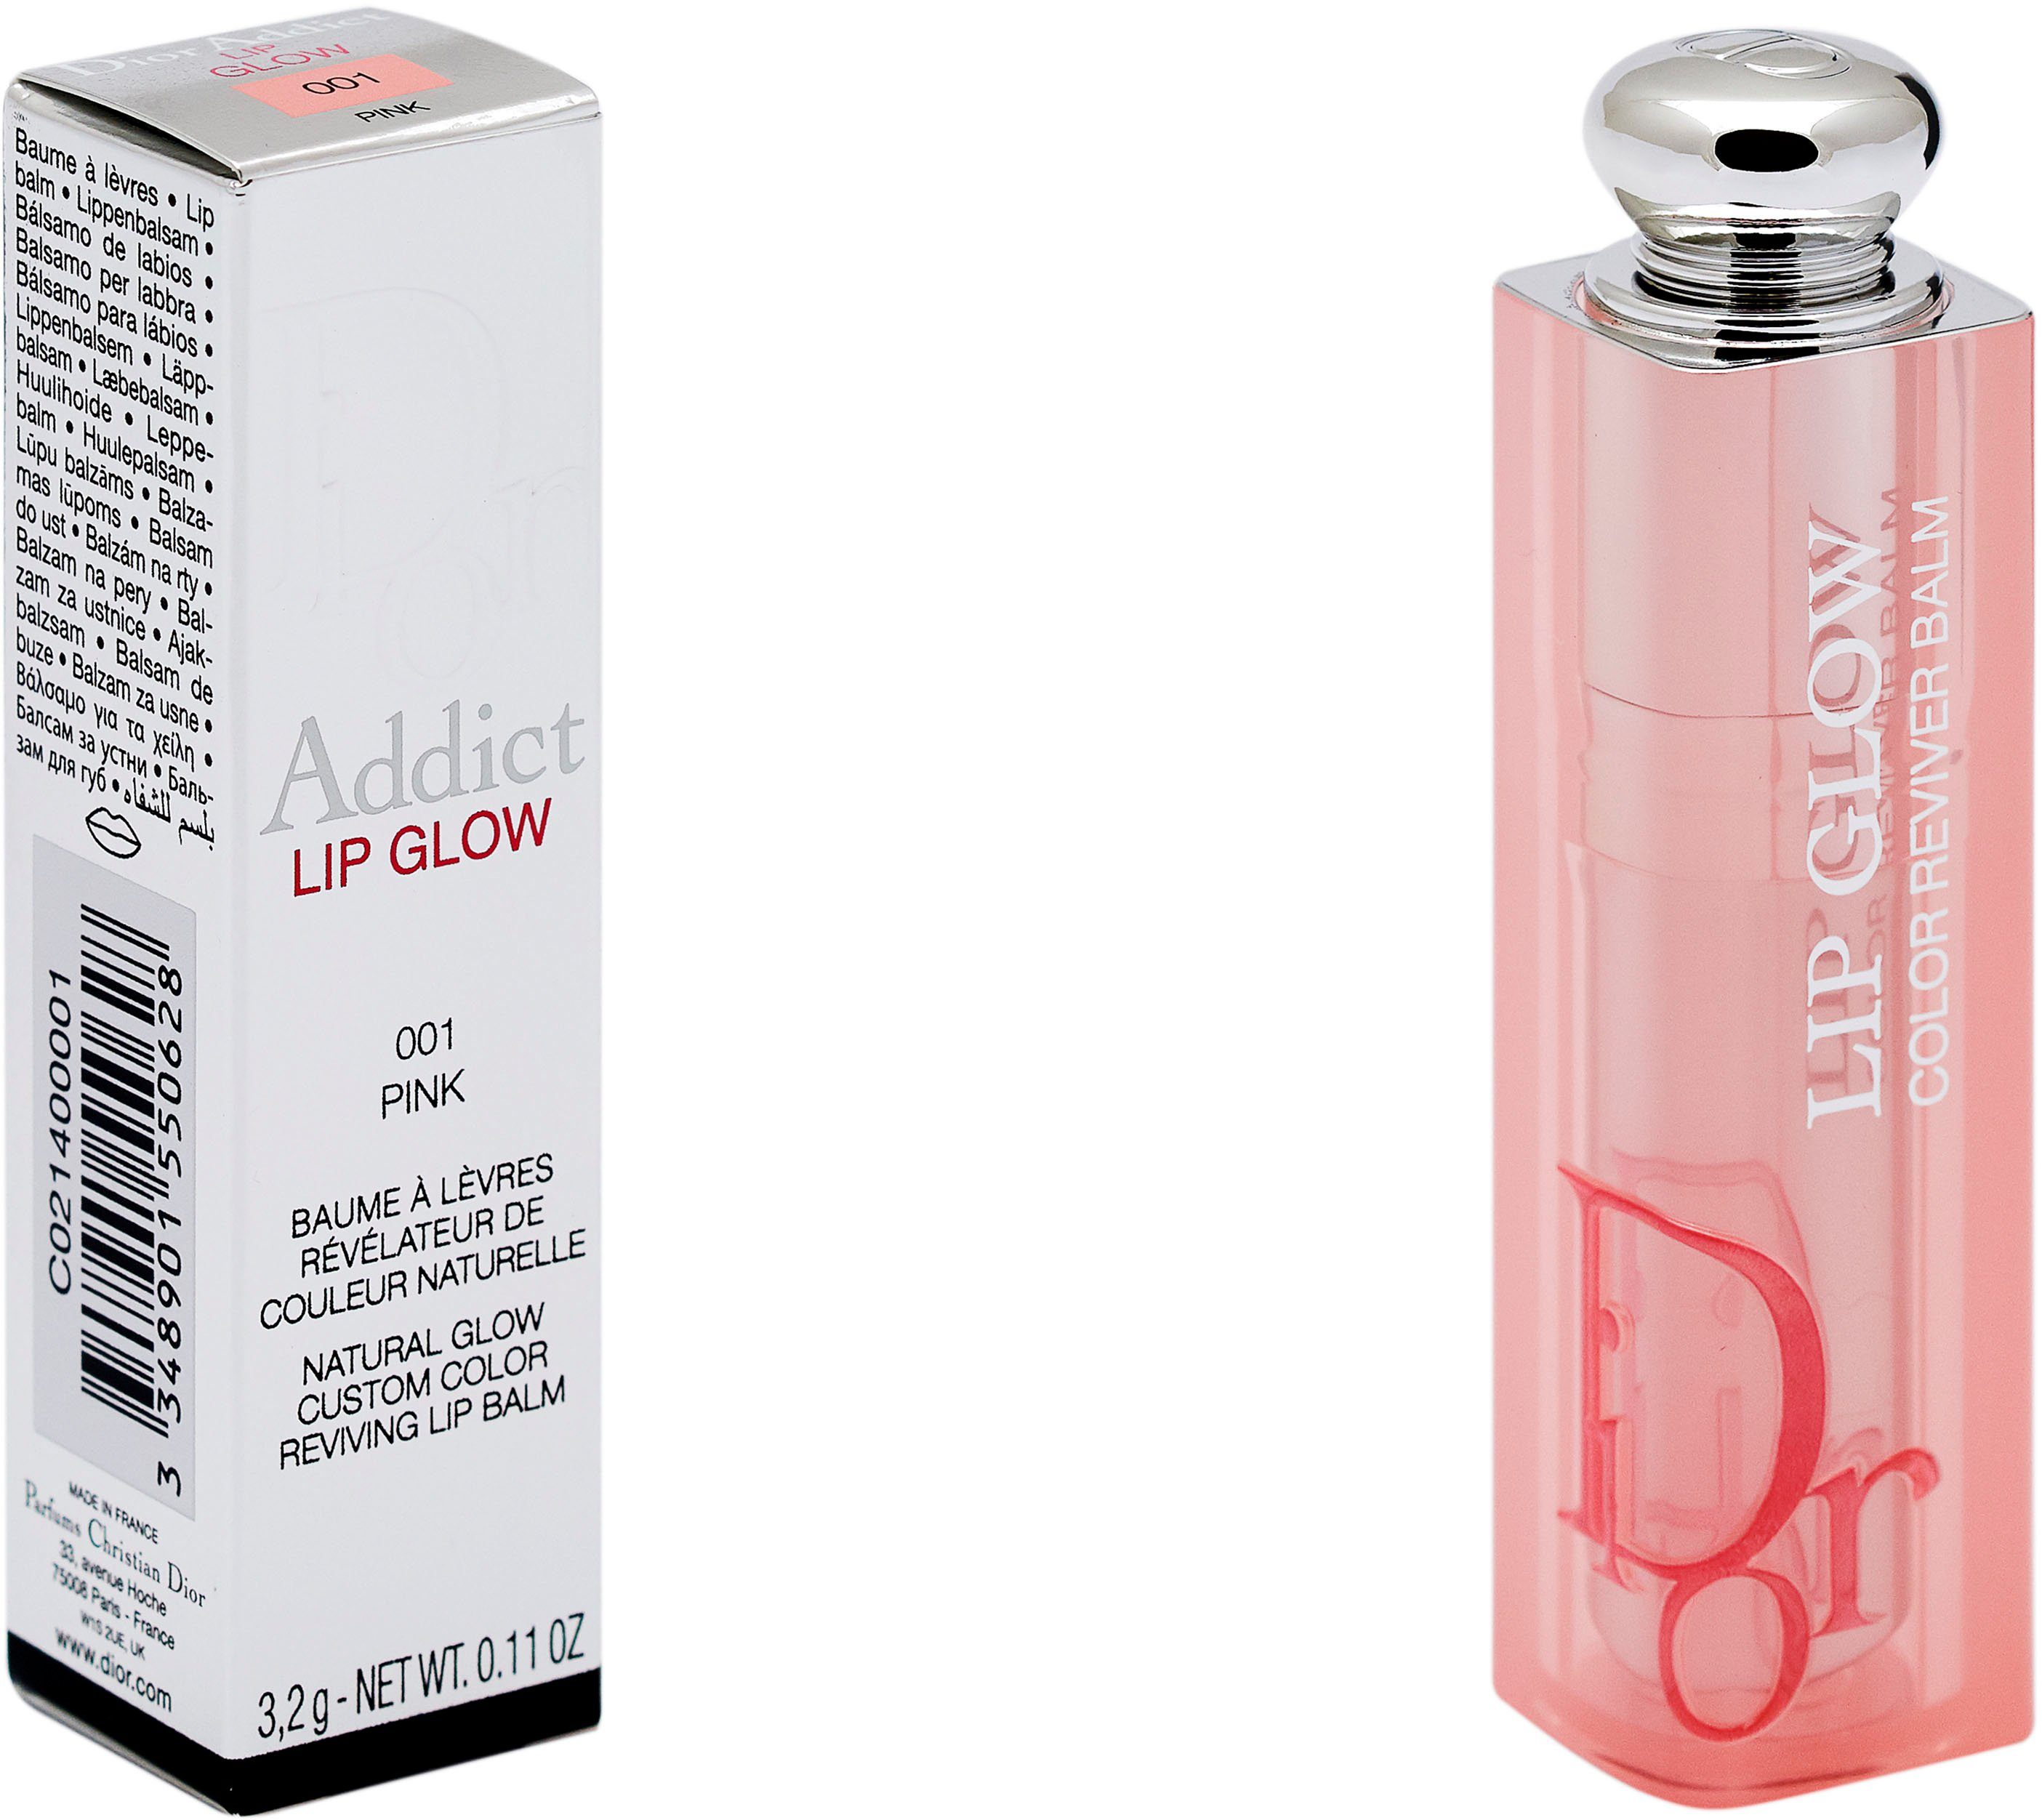 Pink Lippenbalsam Dior Glow 001 Dior Addict Lip